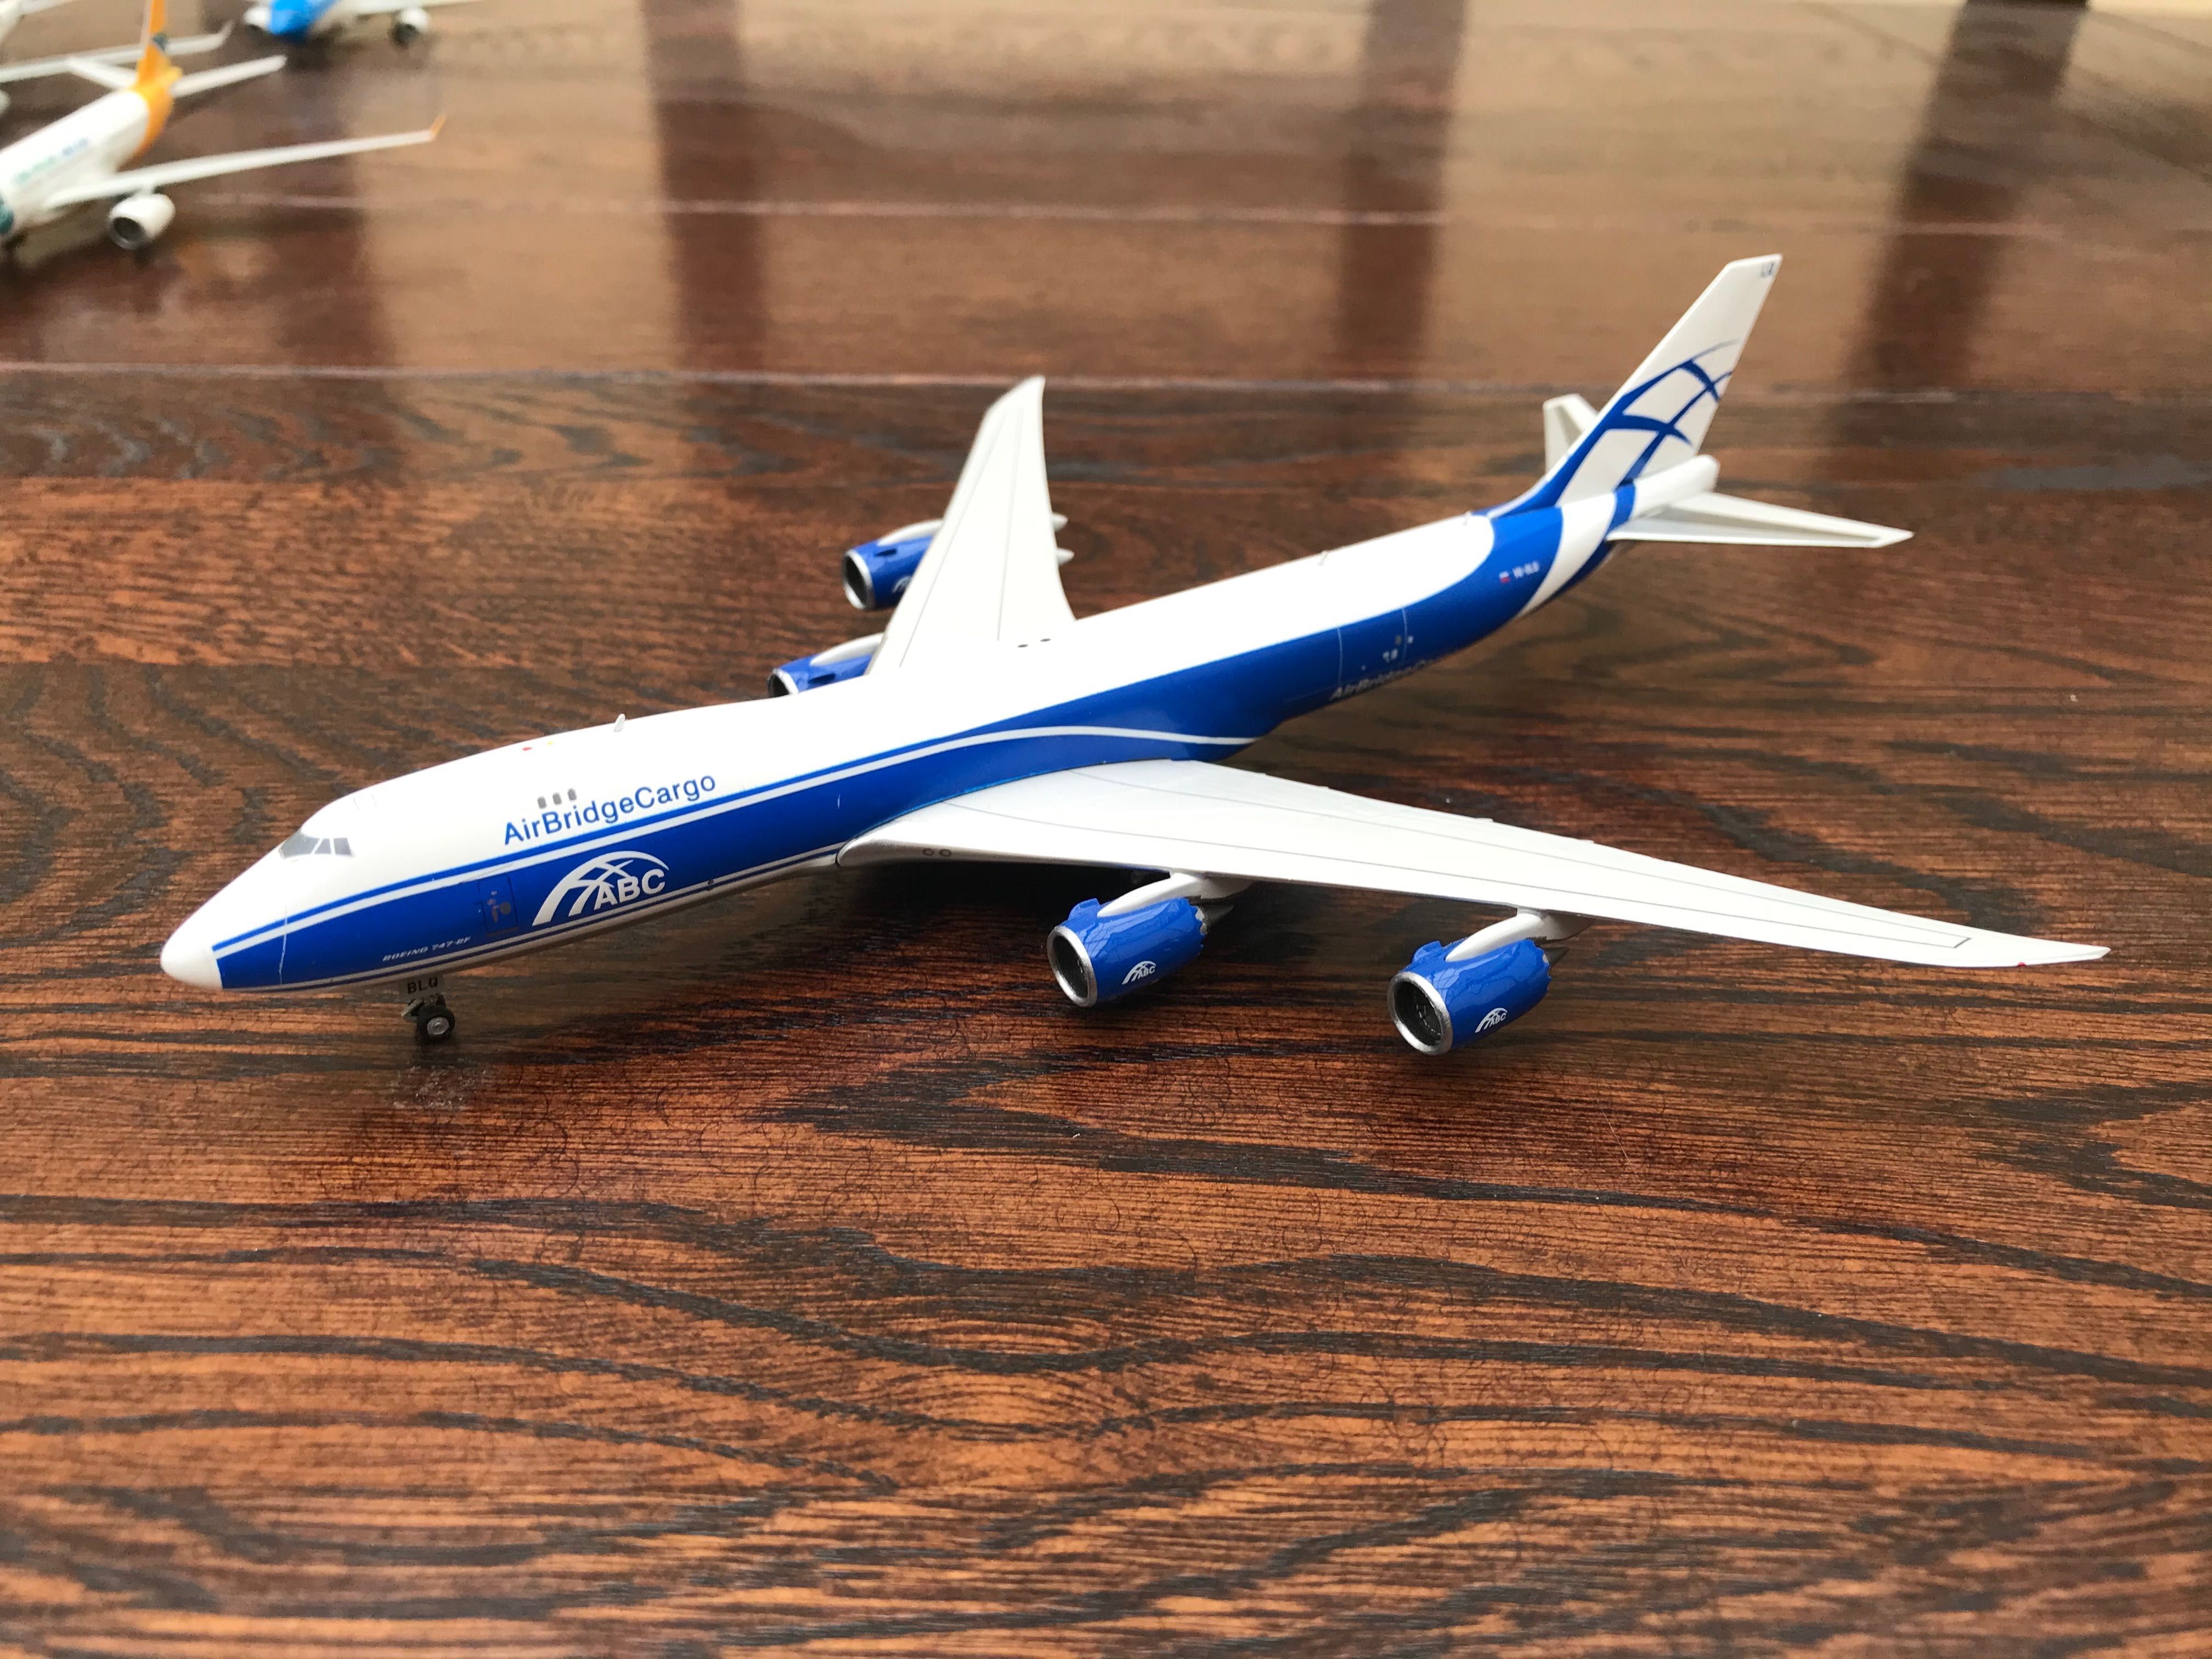 Model samolotu AirBridge Cargo Boeing 747-8F, 1:400